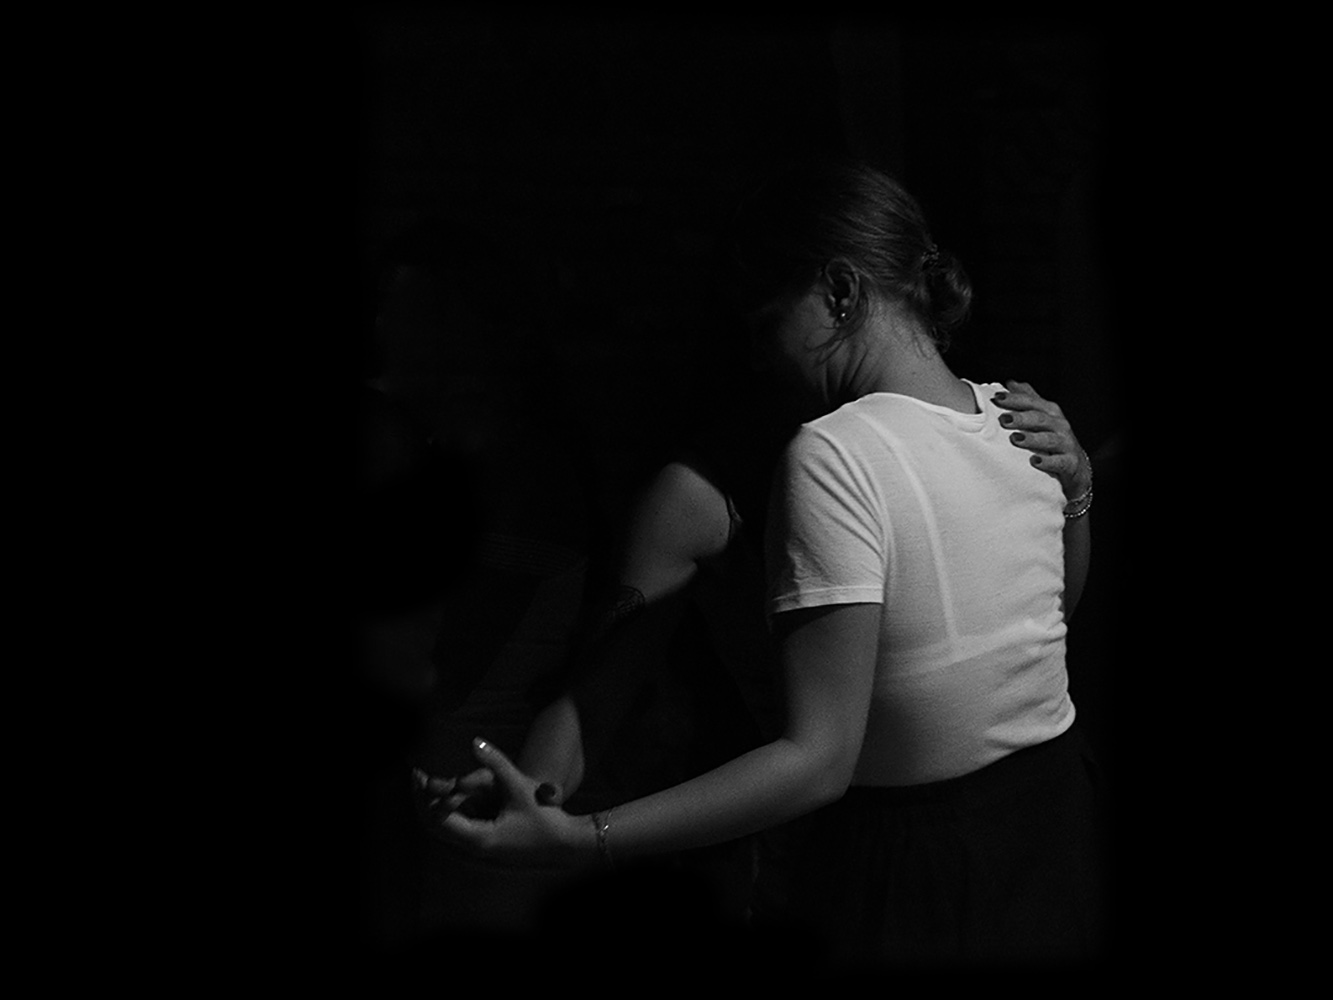 Я пою в темноте. Девушка танцует в темноте. Танцы в темноте. Две девушки в темноте. Танцуя в темноте.